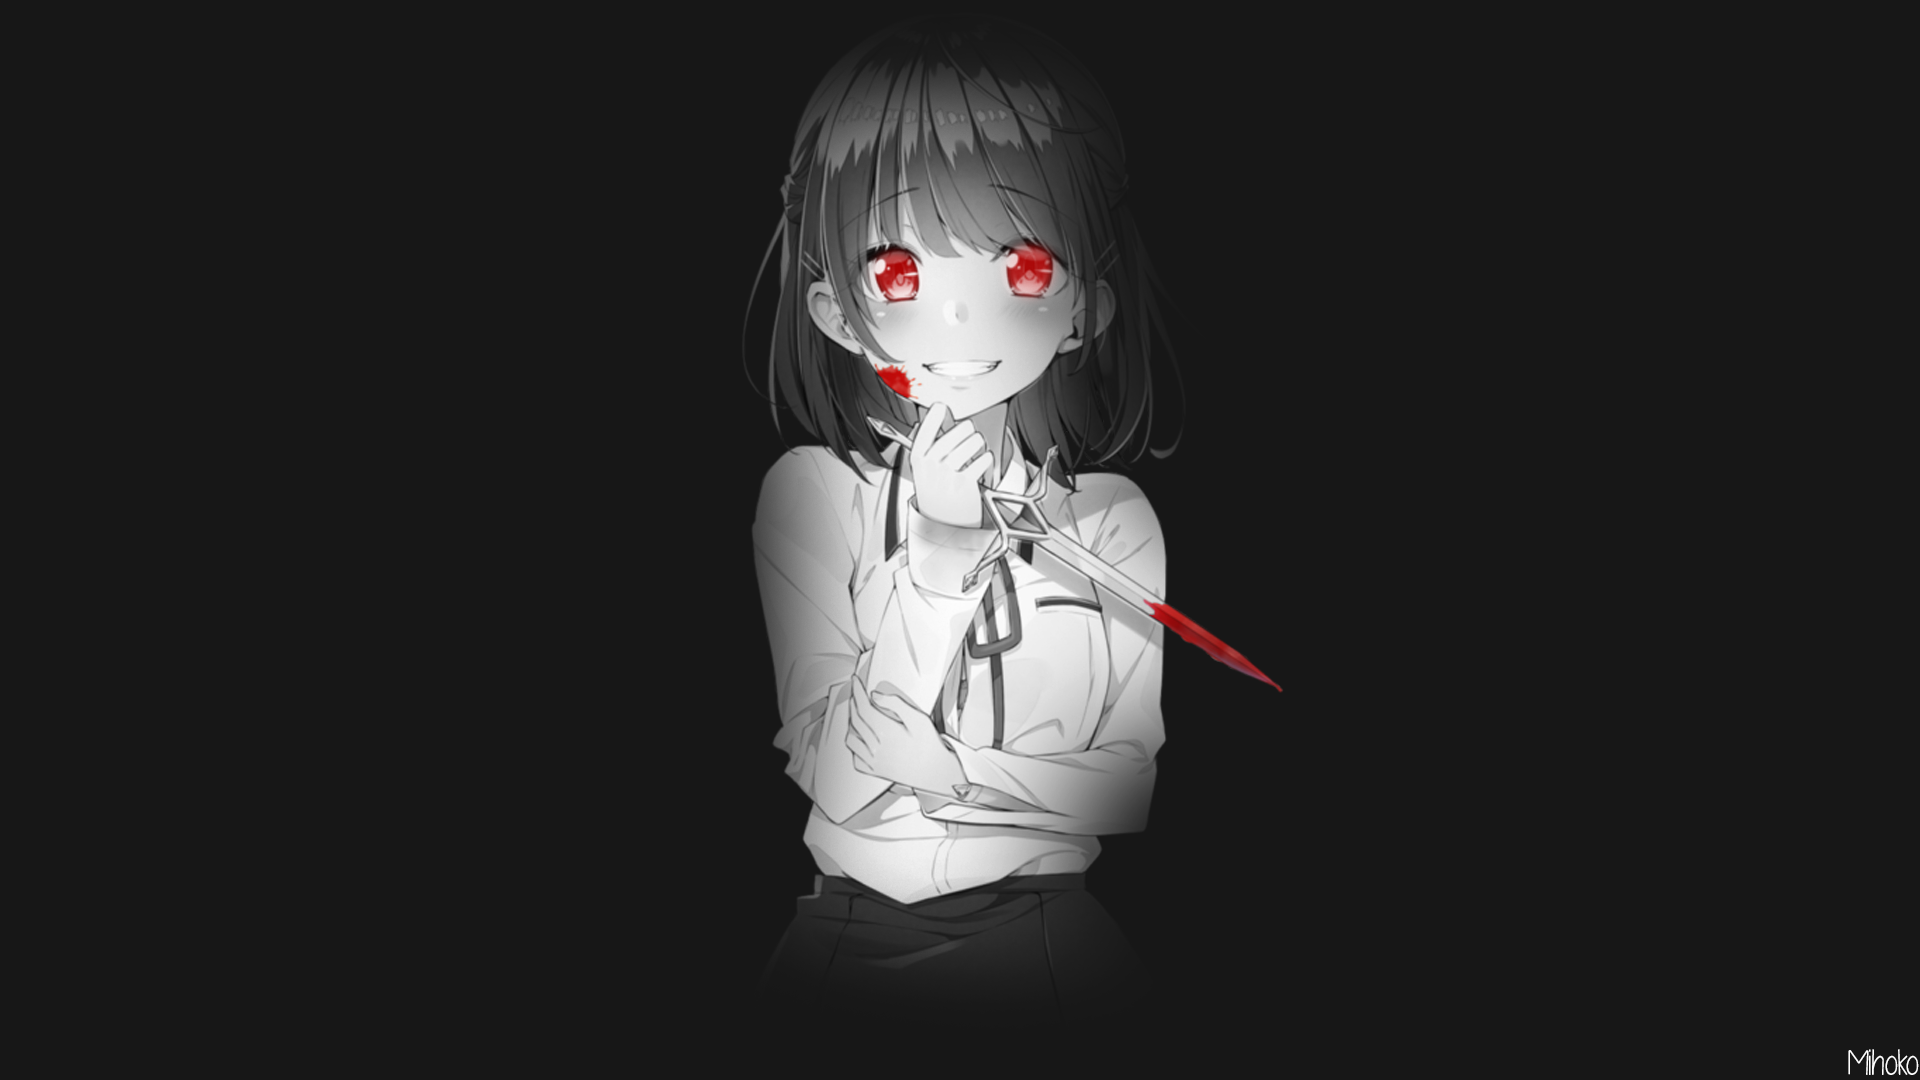 Anime 1920x1080 anime anime girls blood red eyes monochrome knife smiling short hair blushing